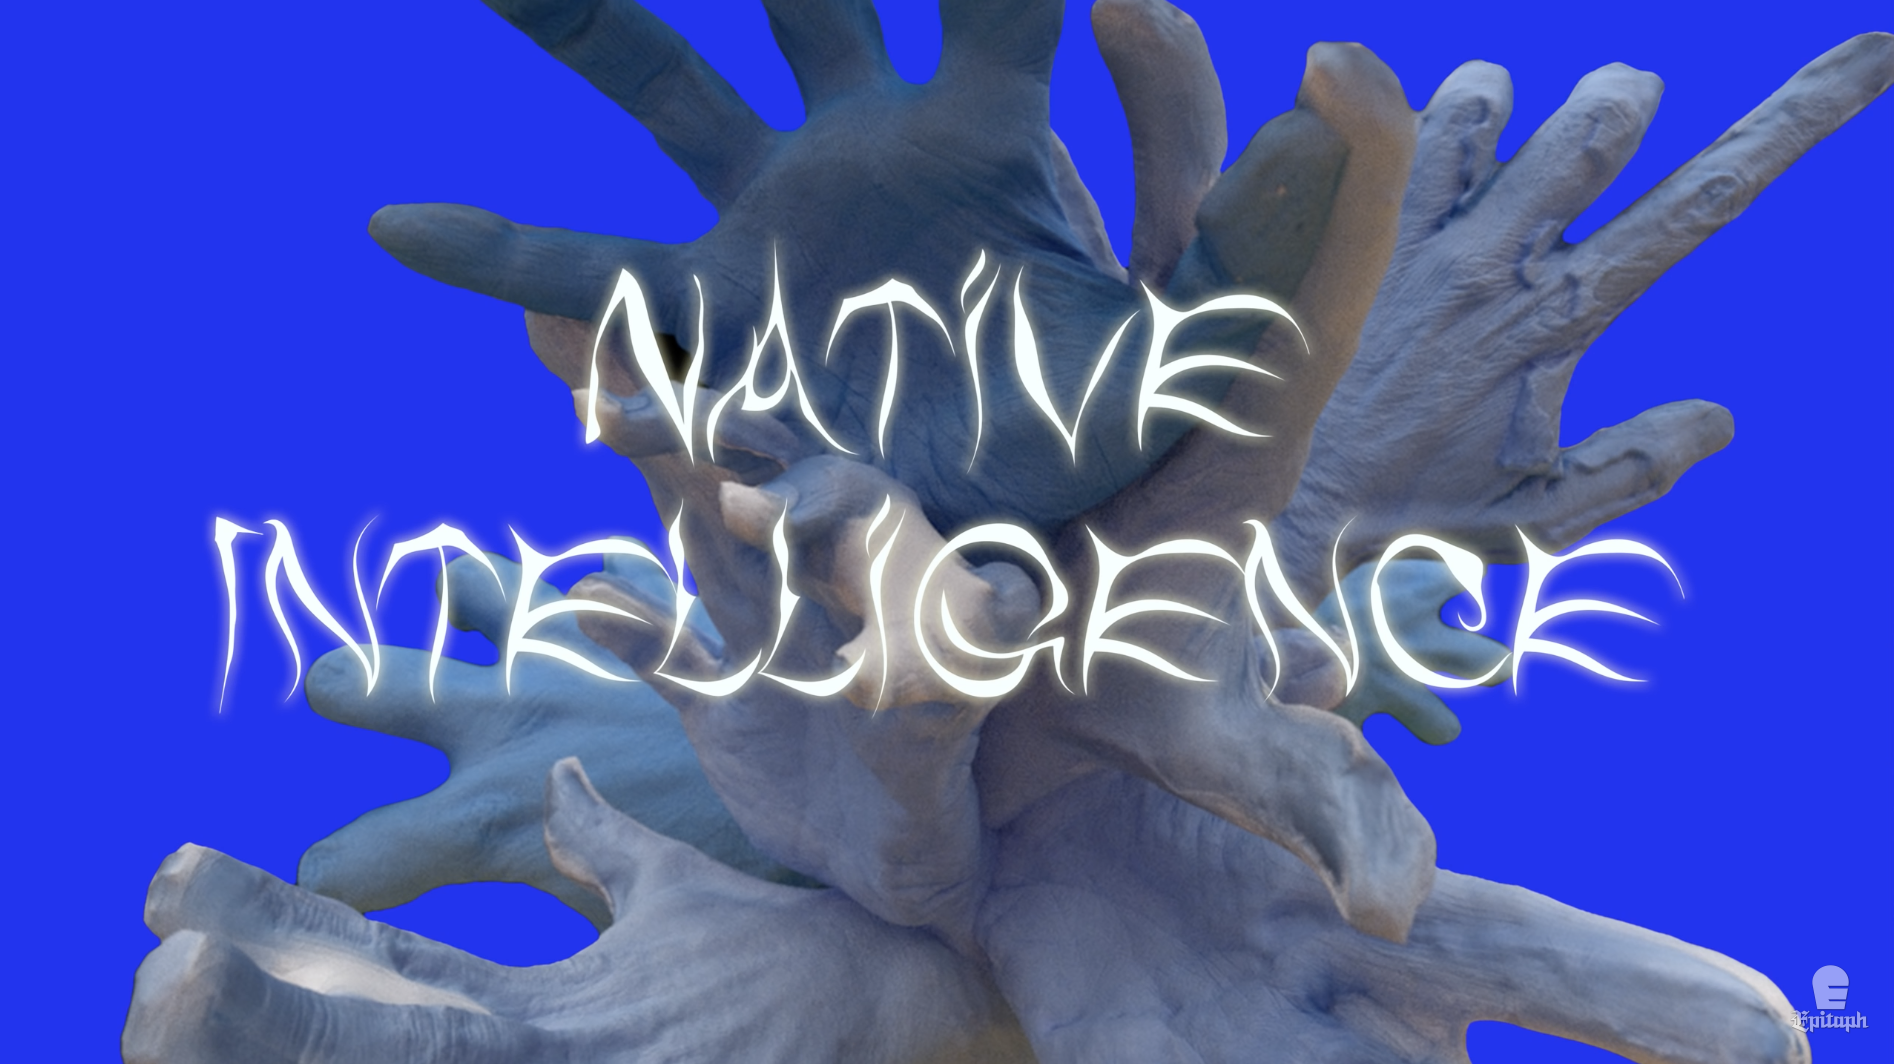 Listen: Native Intelligence by Danny Elfman & Trent Reznor